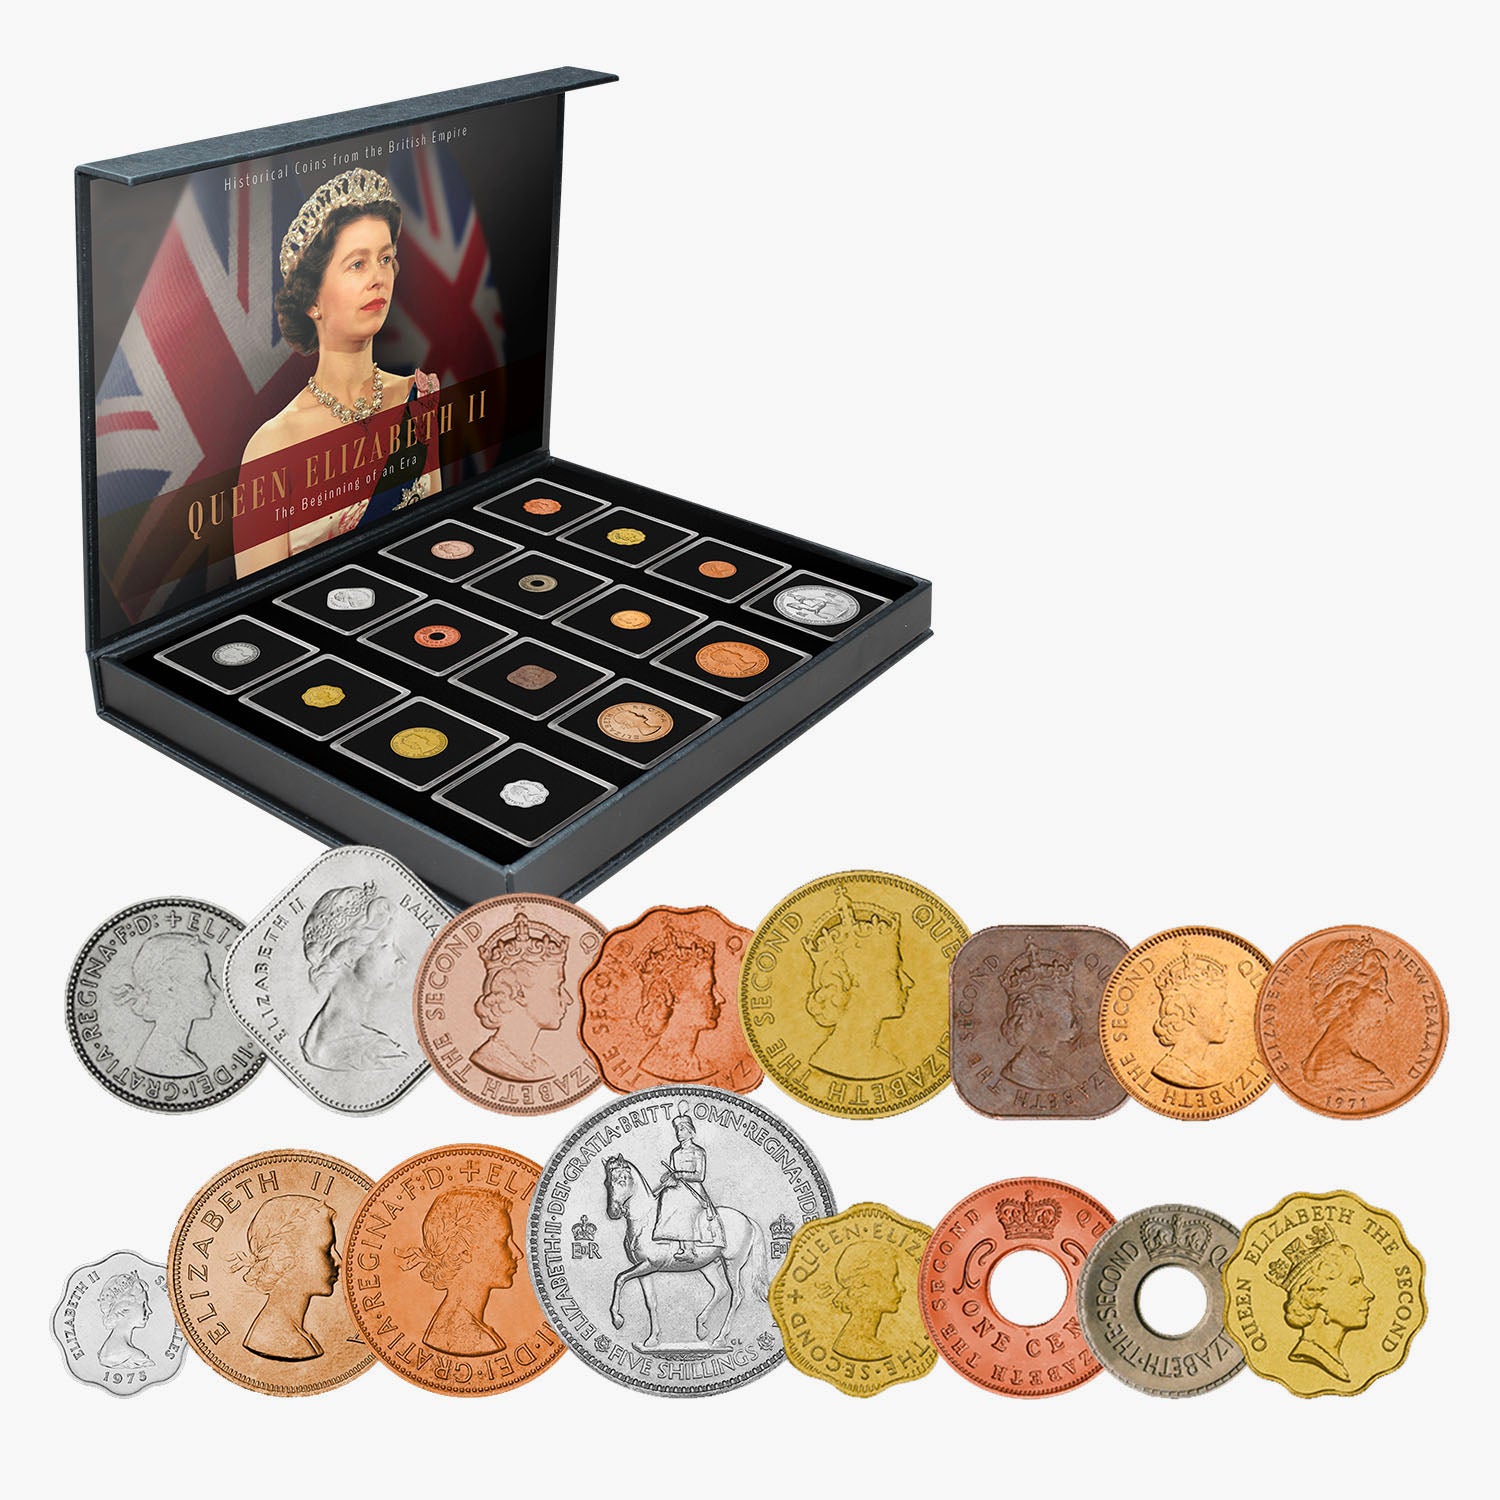 Queen Elizabeth II The Beginning of an Era Coin Collection